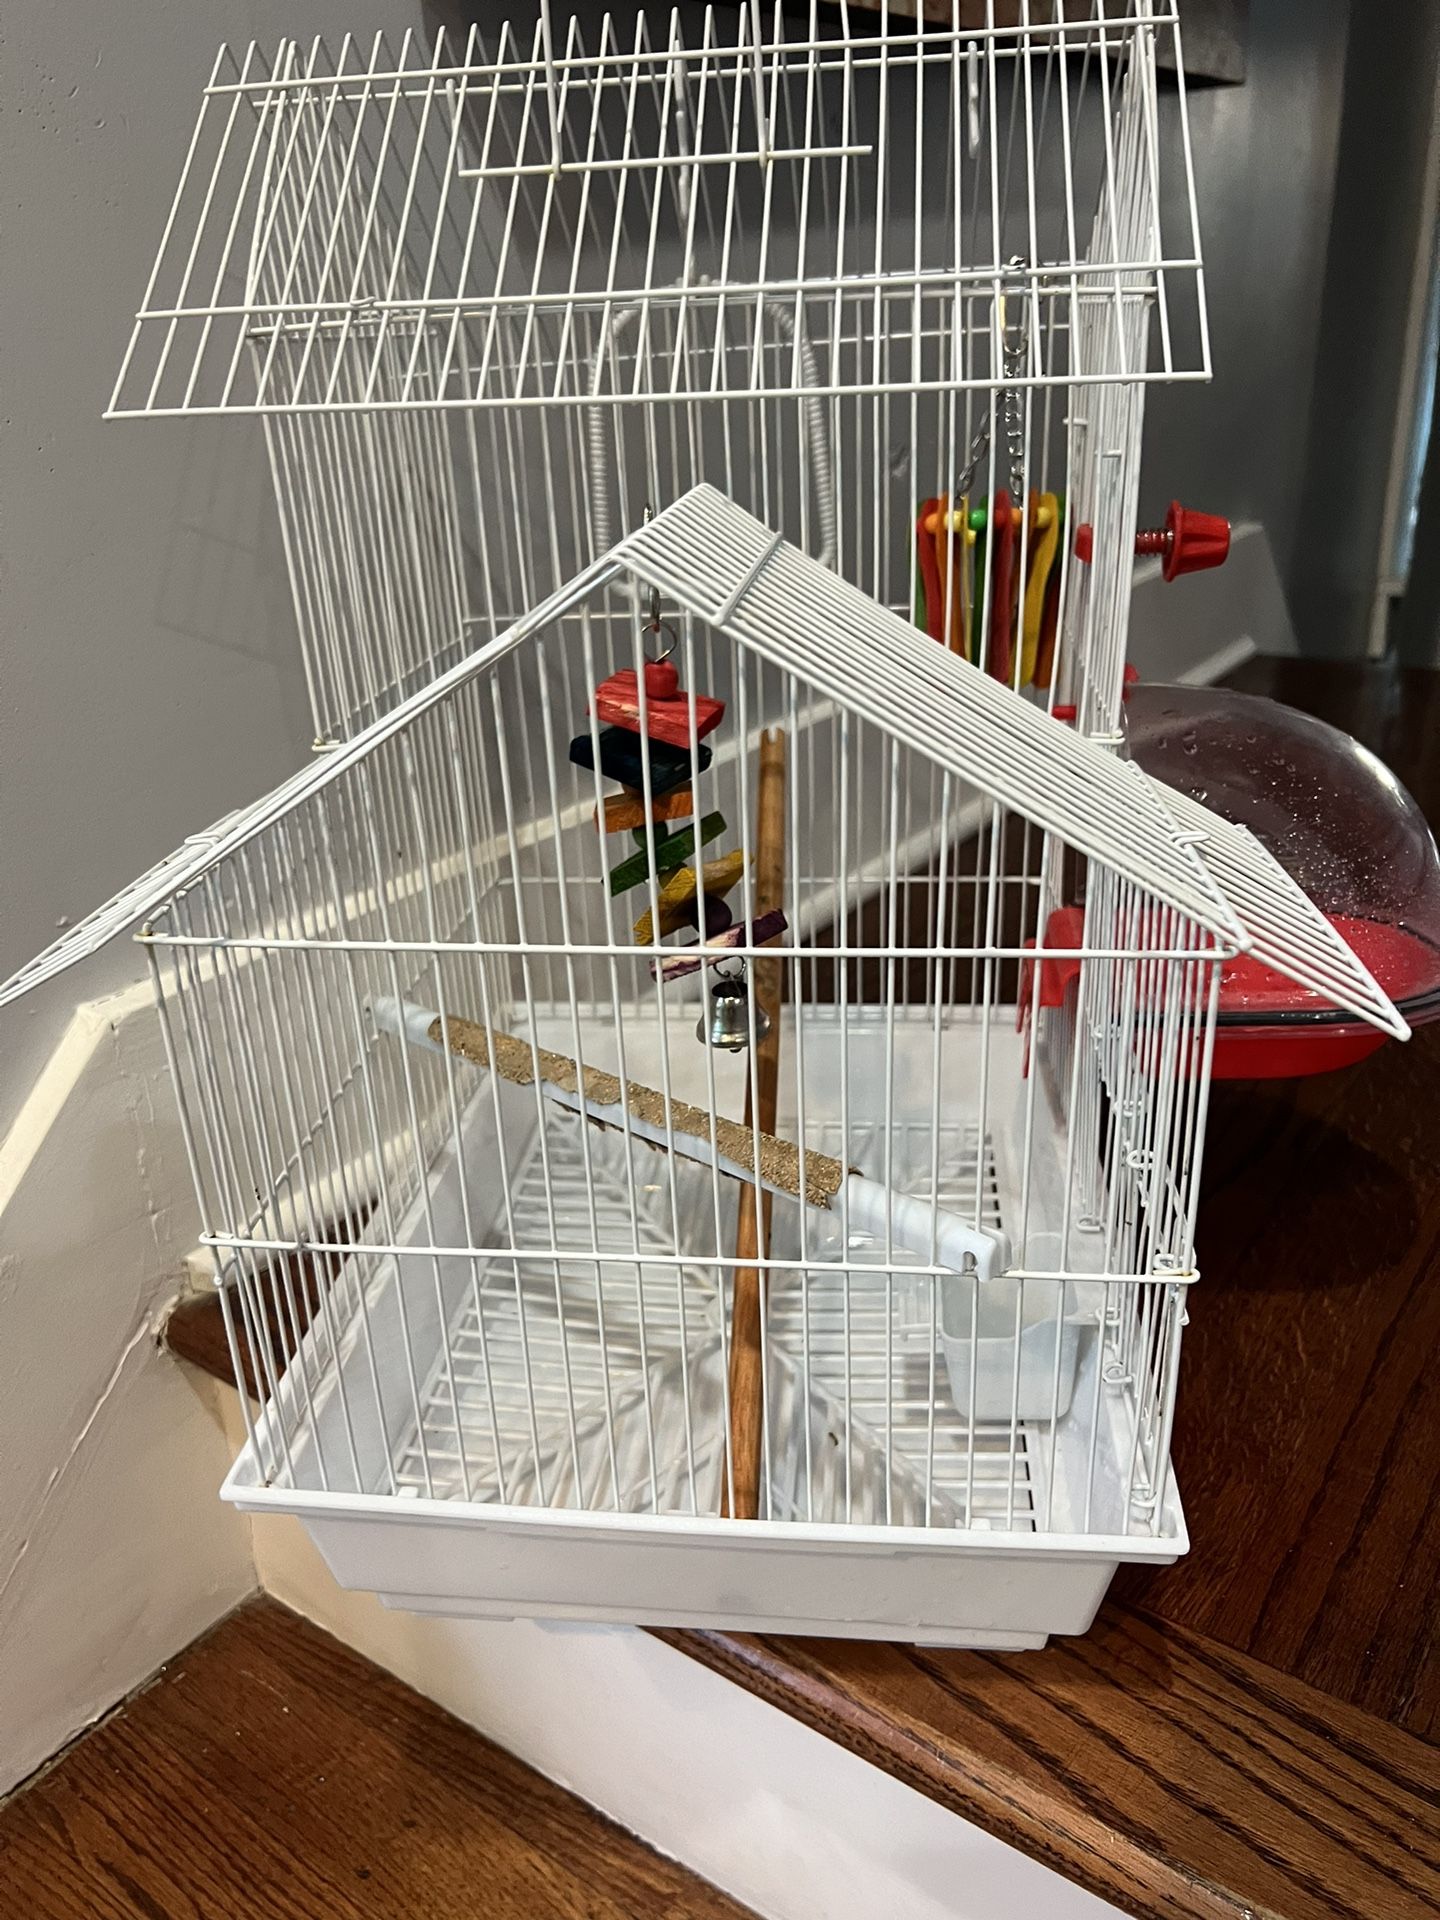 Bird cage 14x12x20 “ And a bird bath 